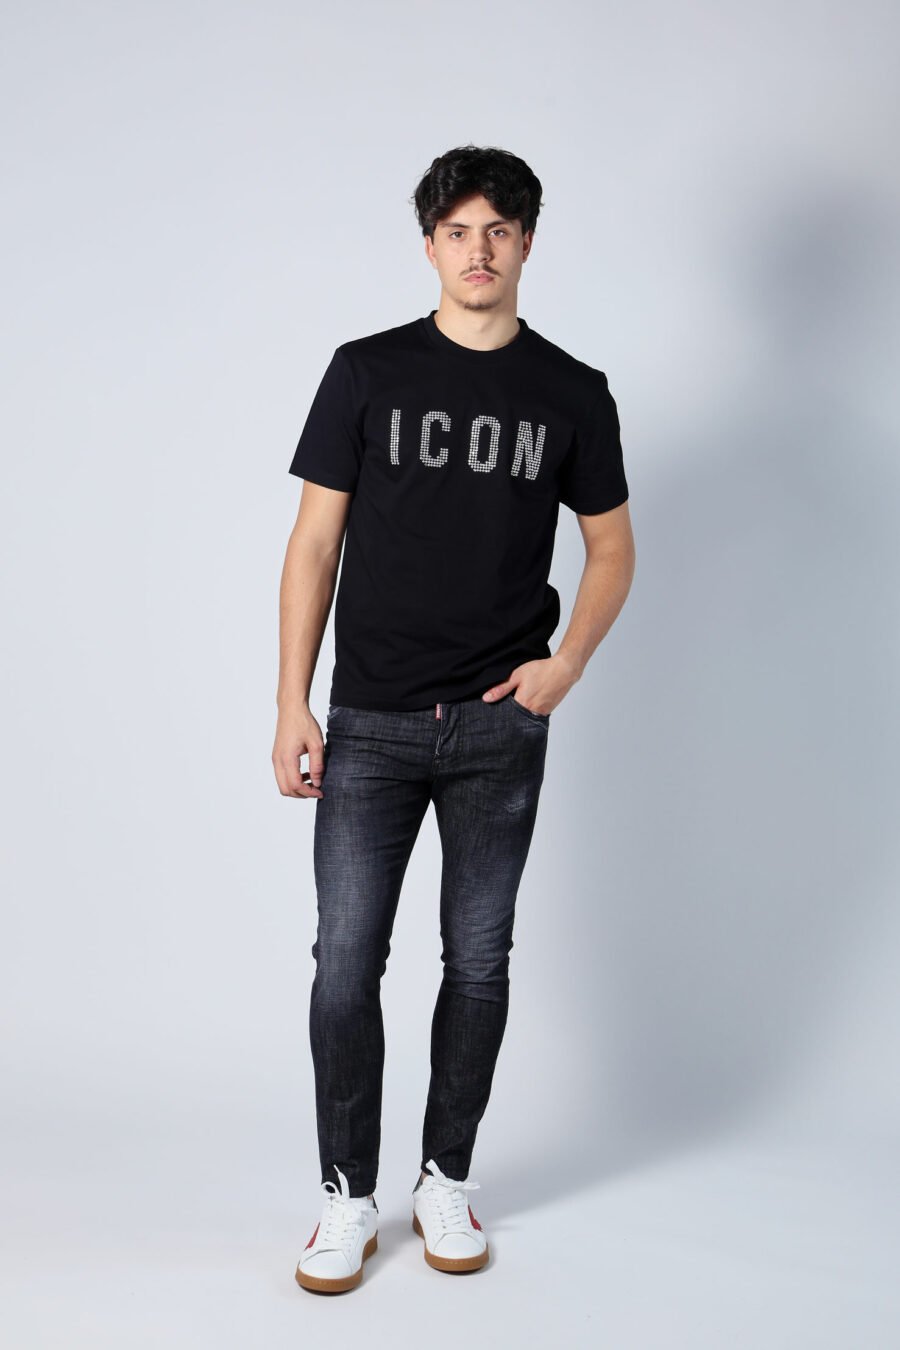 T-shirt preta com logótipo "icon" axadrezado branco - Untitled Catalog 05678